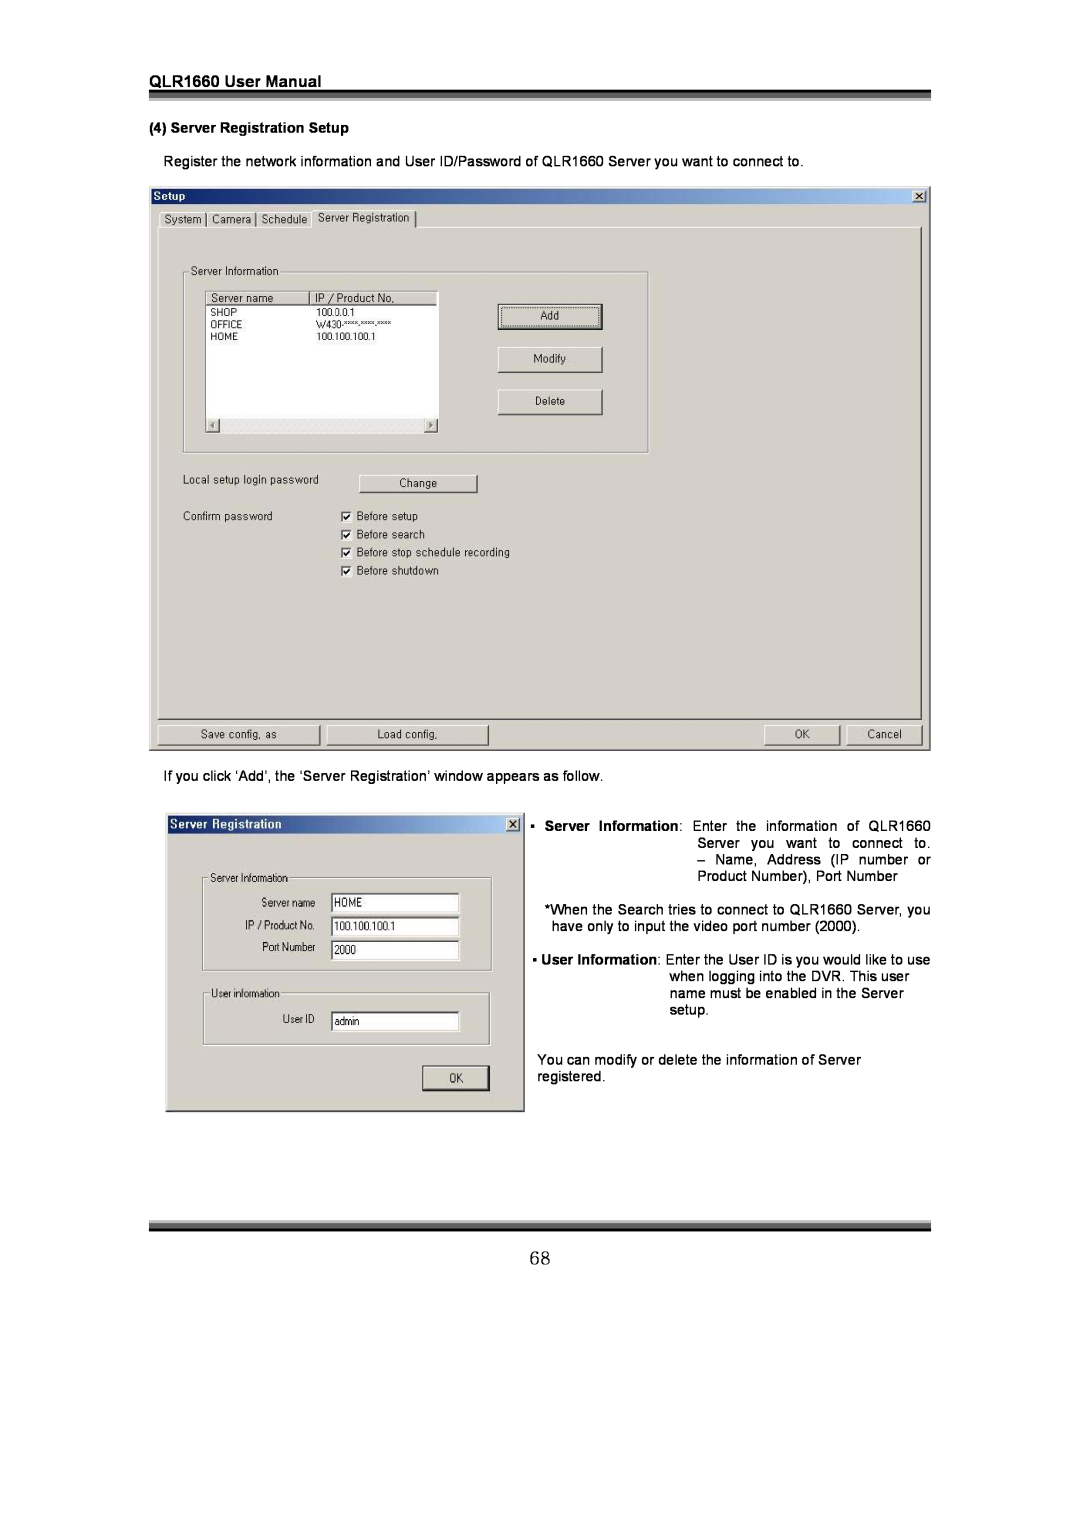 LOREX Technology instruction manual Server Registration Setup, QLR1660 User Manual 